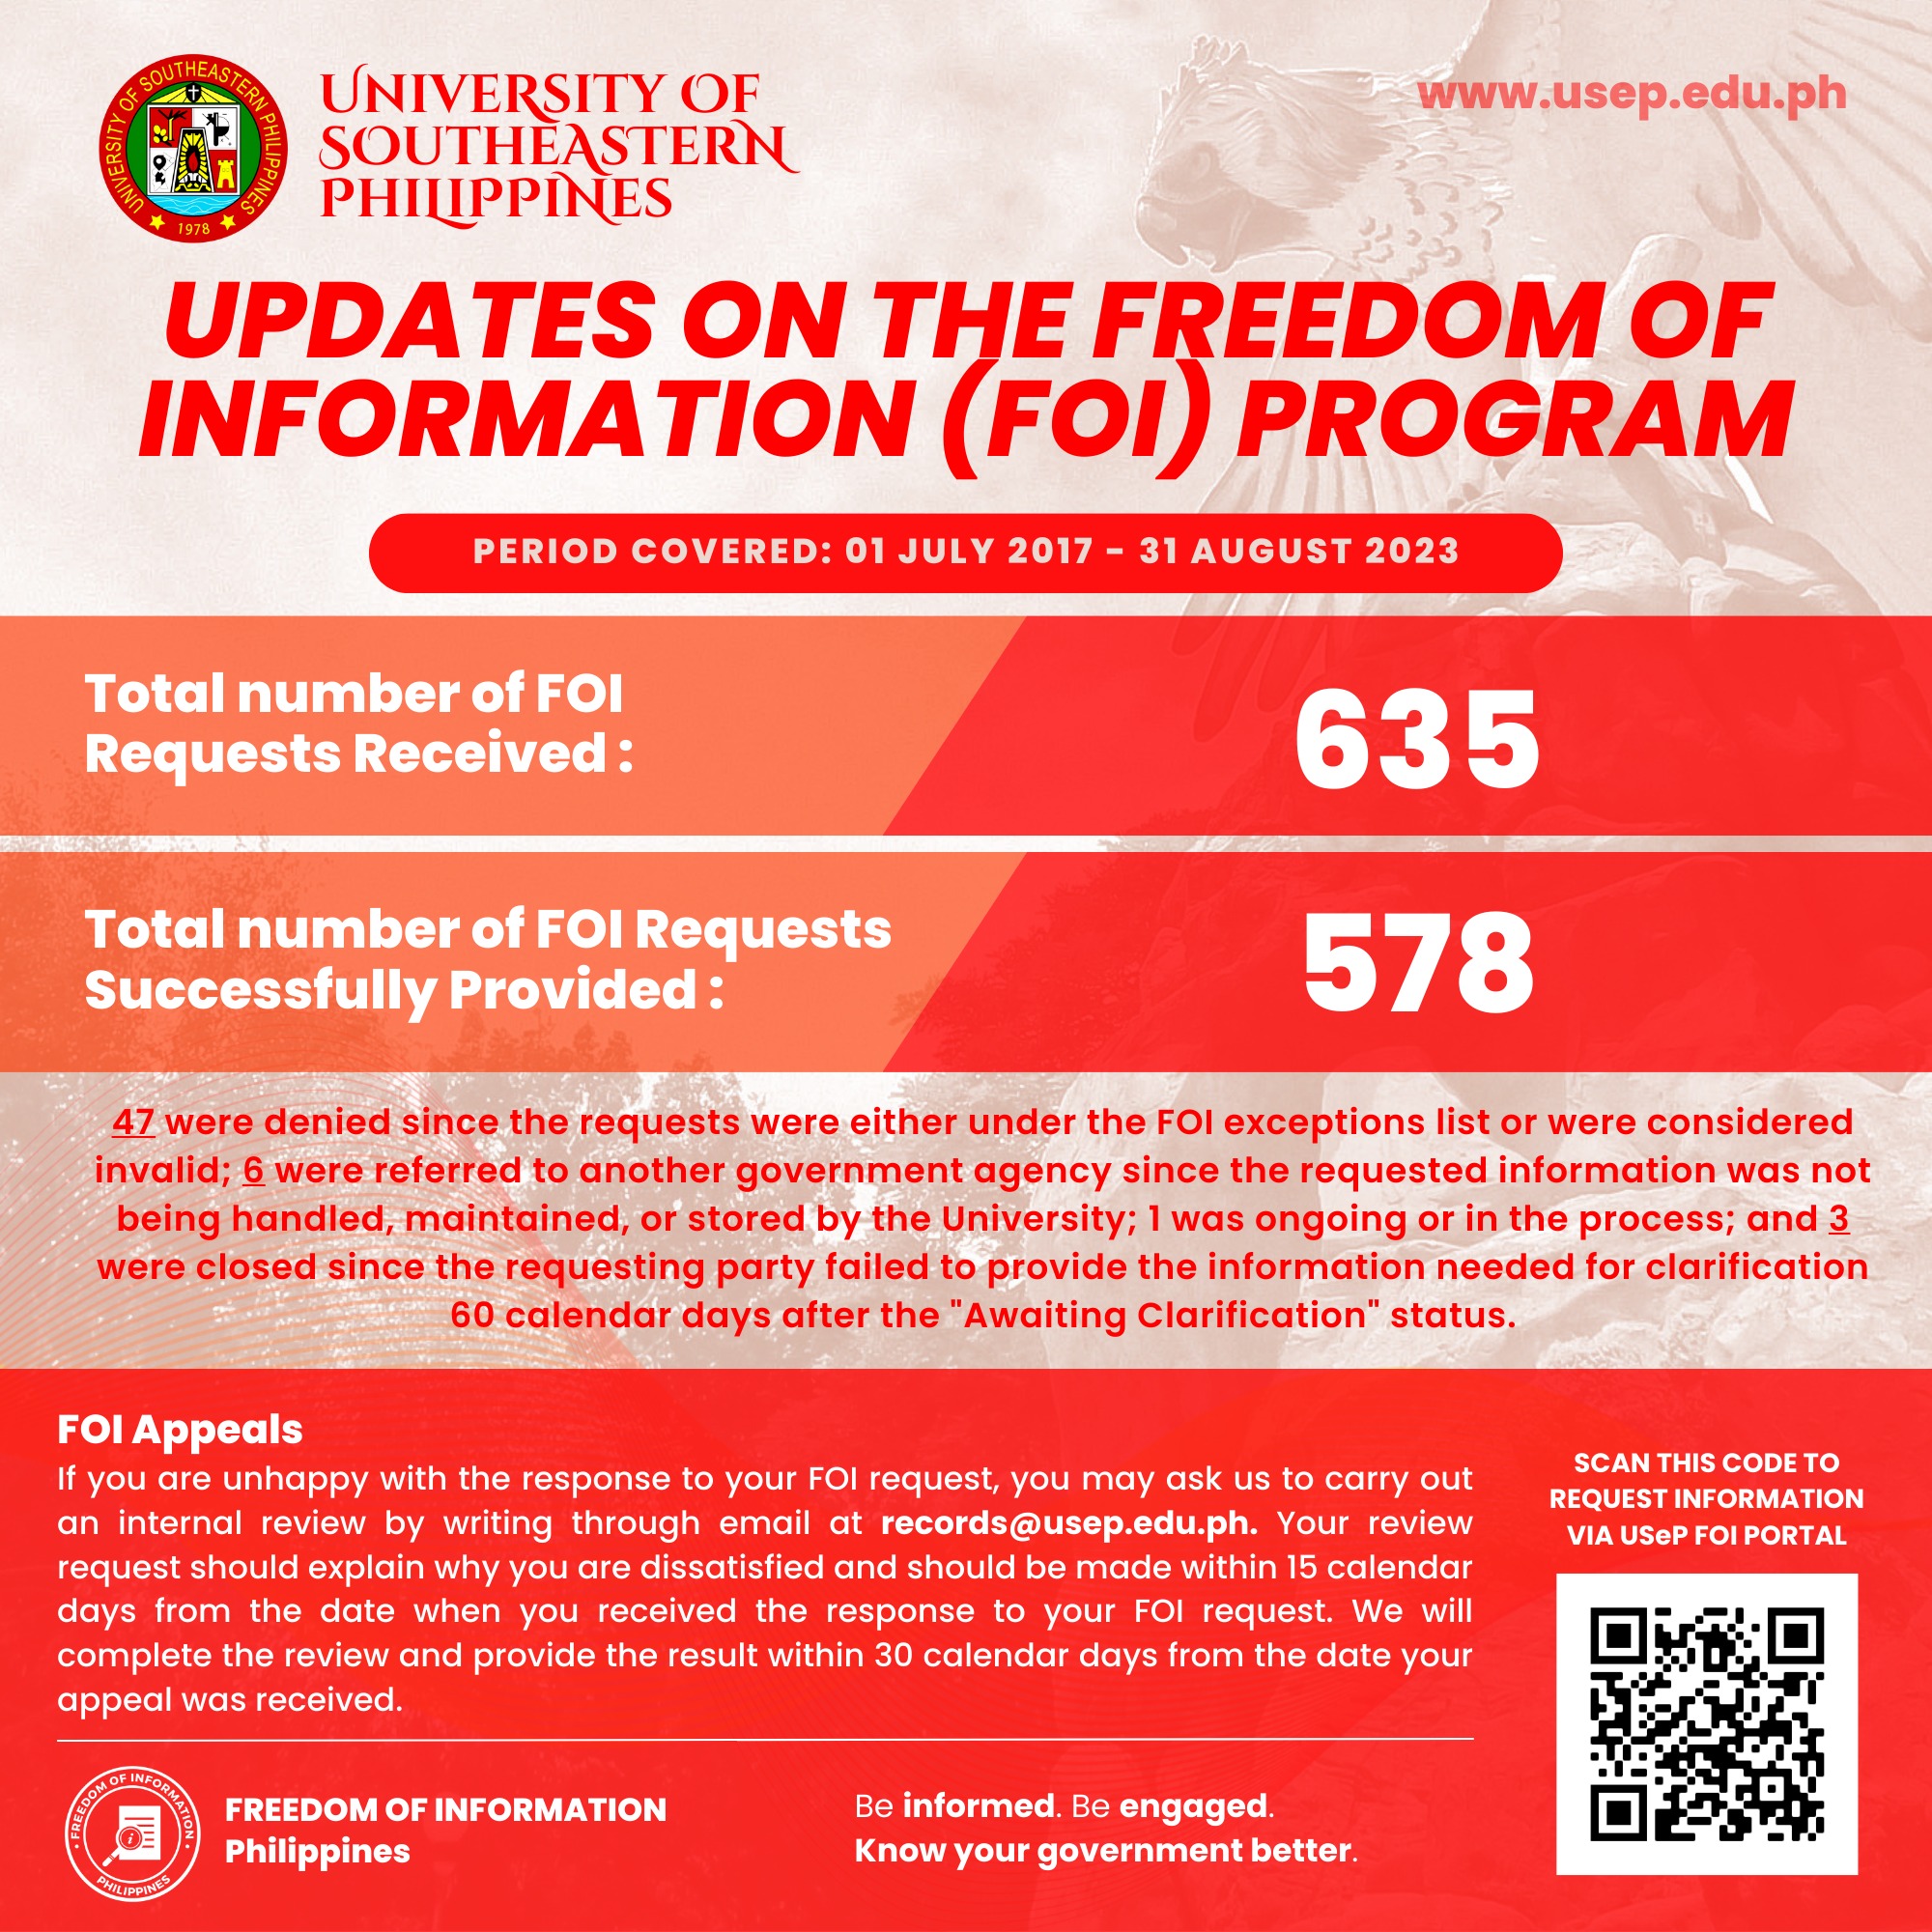 USeP FOI Program update as of August 2023